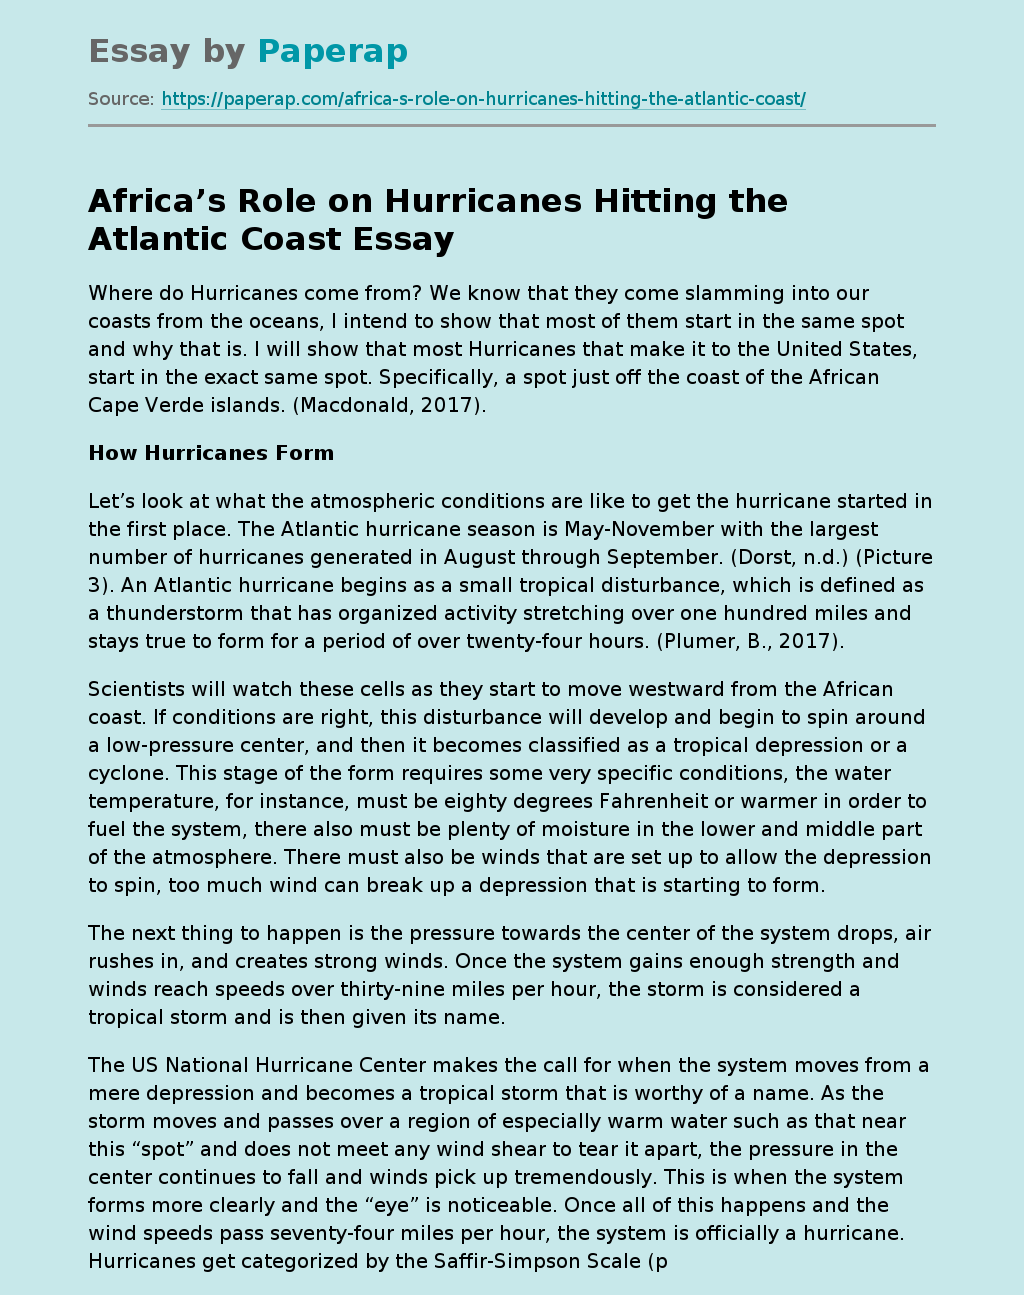 Africa’s Role on Hurricanes Hitting the Atlantic Coast